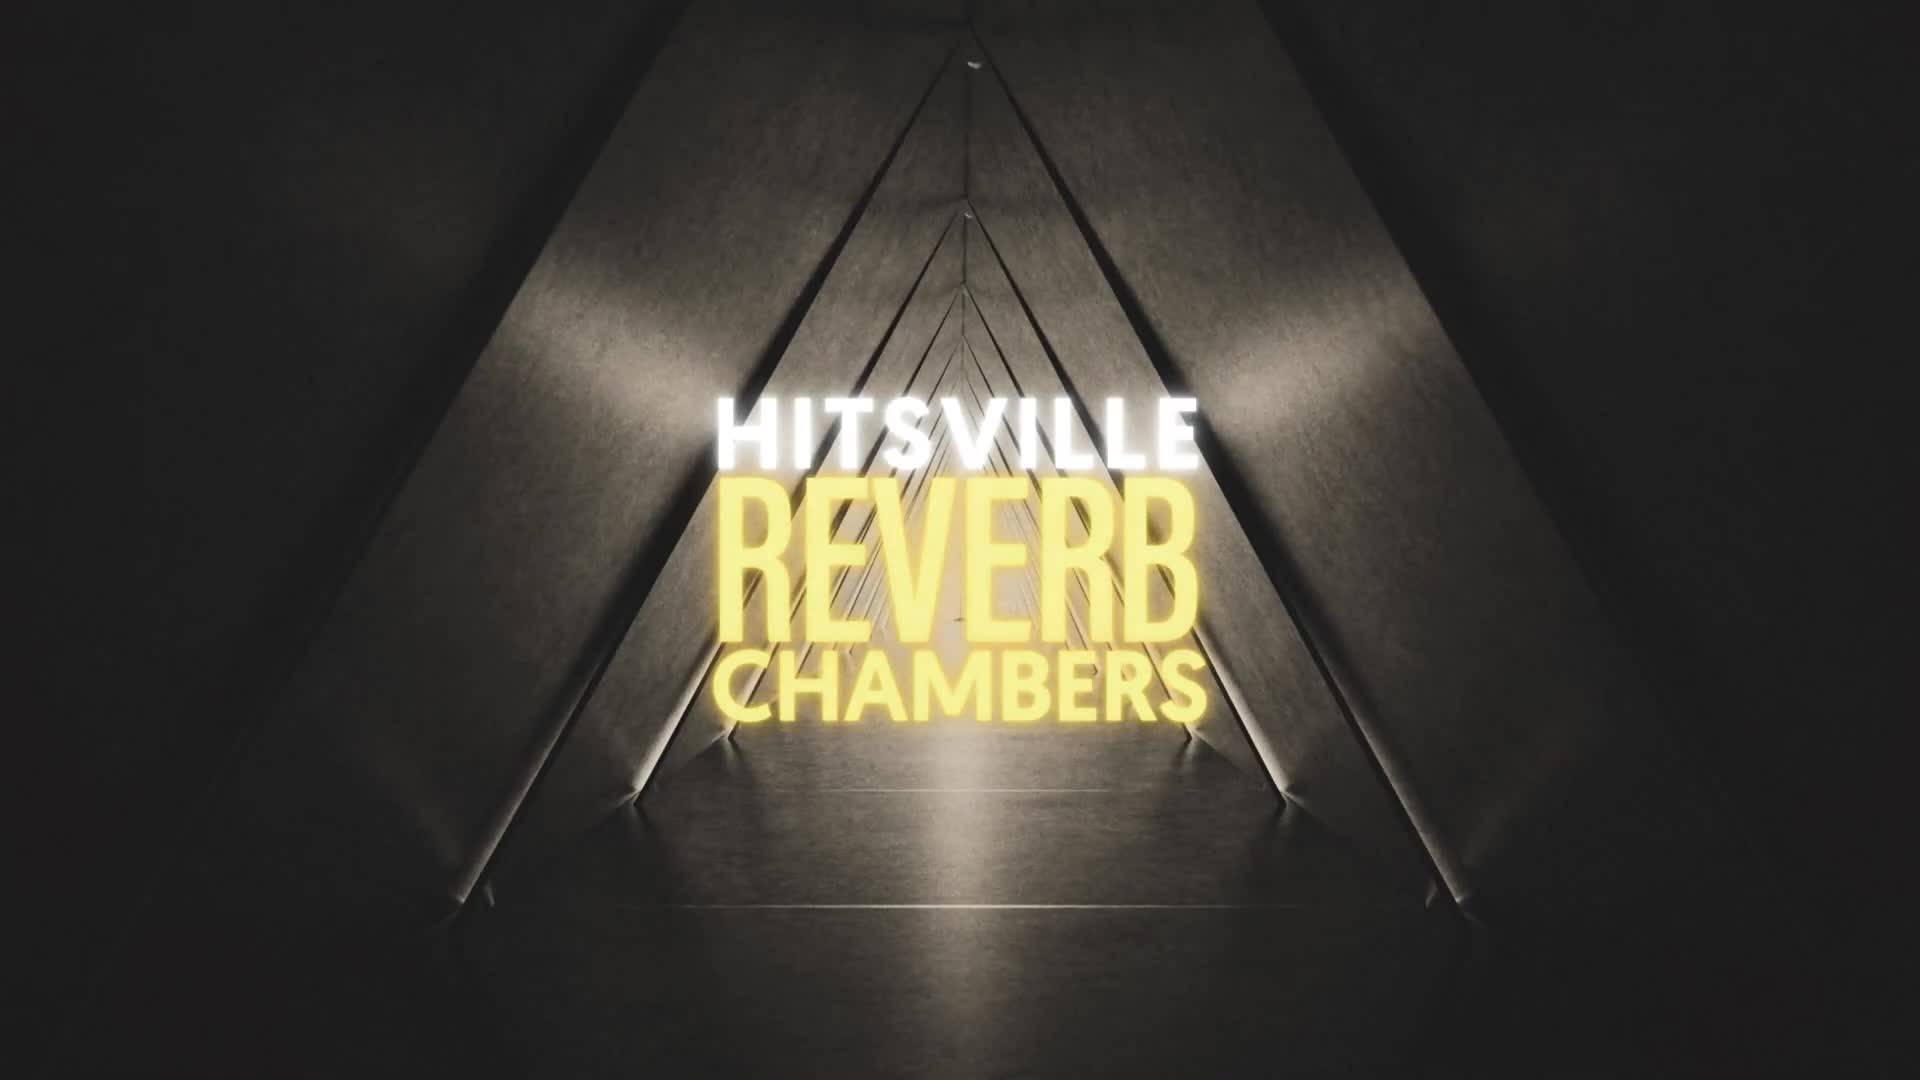 Hitsville Reverb Chambers